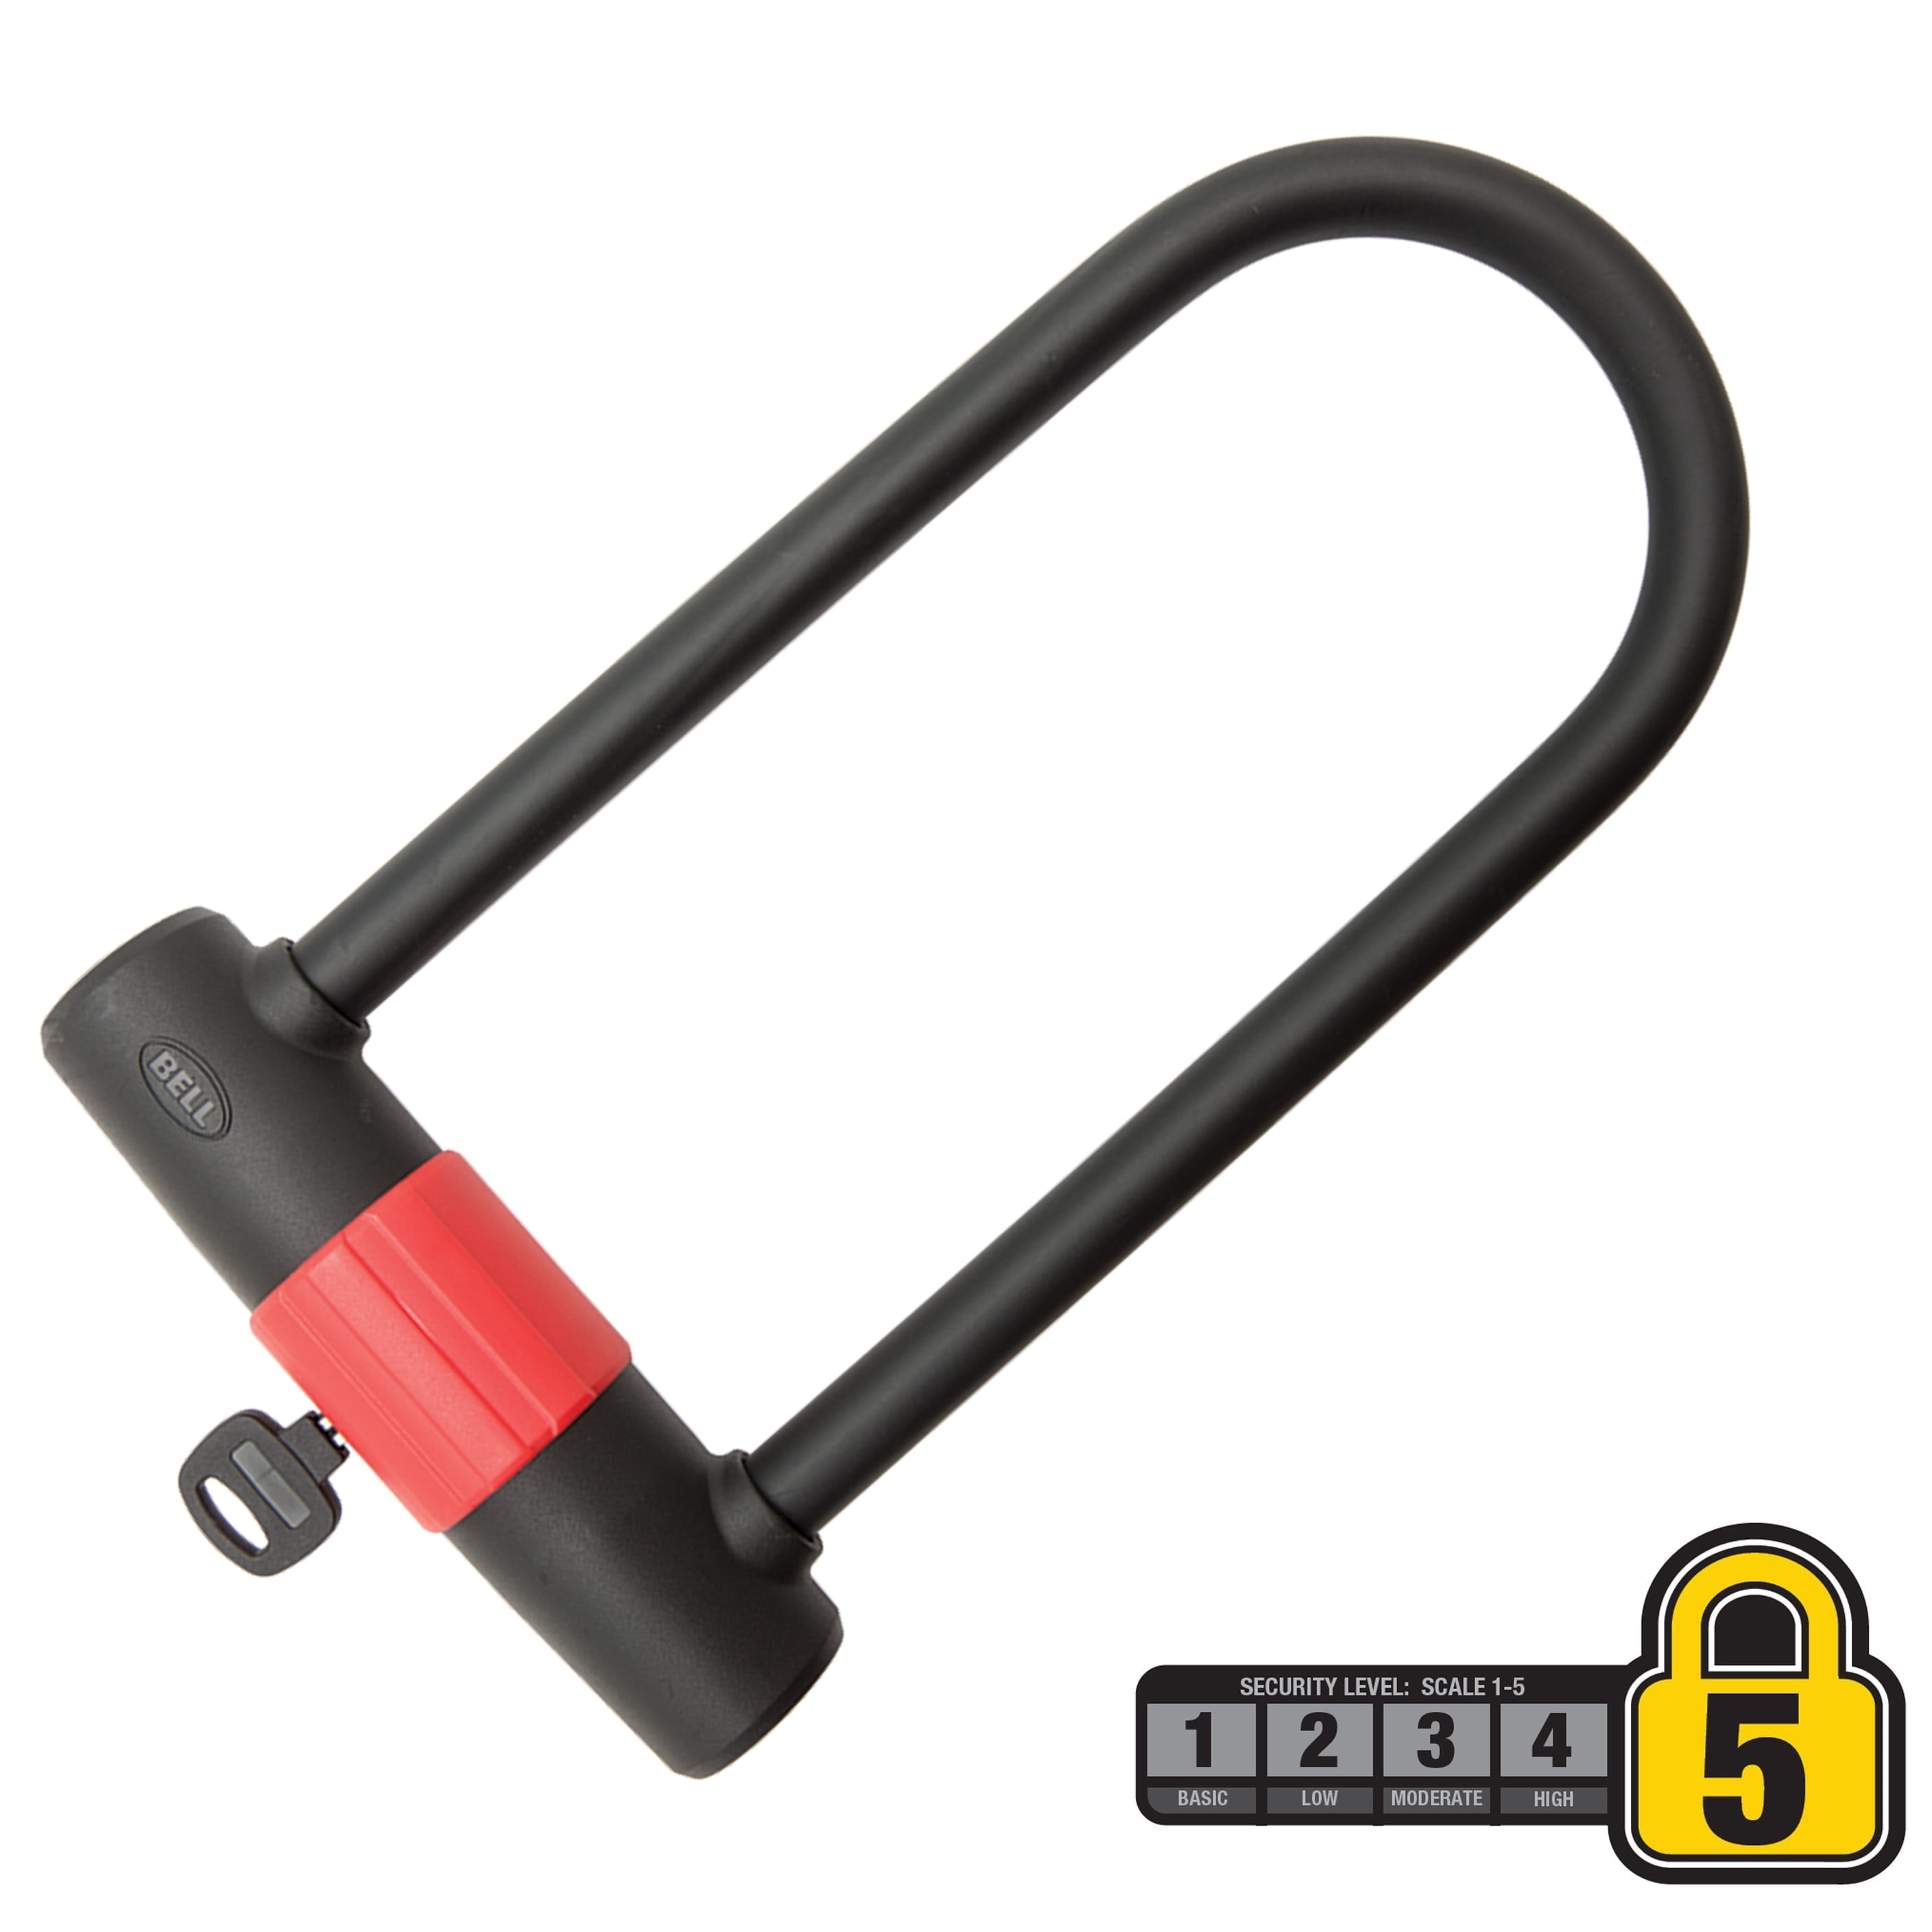 Bell Bike Bicycle Long U-lock Anti-theft Shackle 2 Keys Hardened Steel Level 5 for sale online 